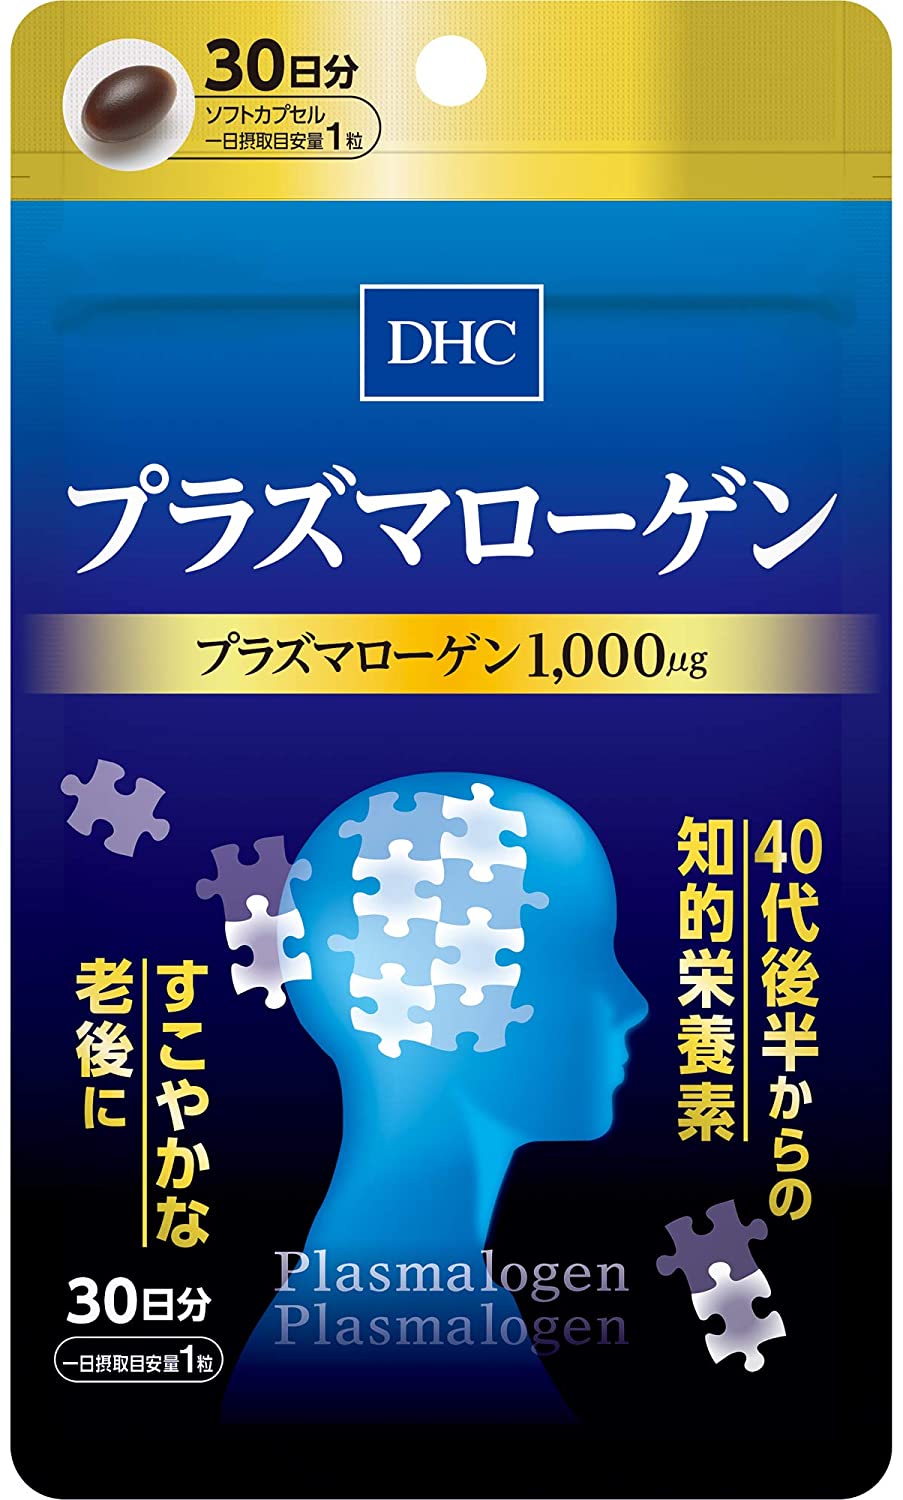 DHC Плазмалоген для стимуляции работы мозга 30 капсул на 30 дней